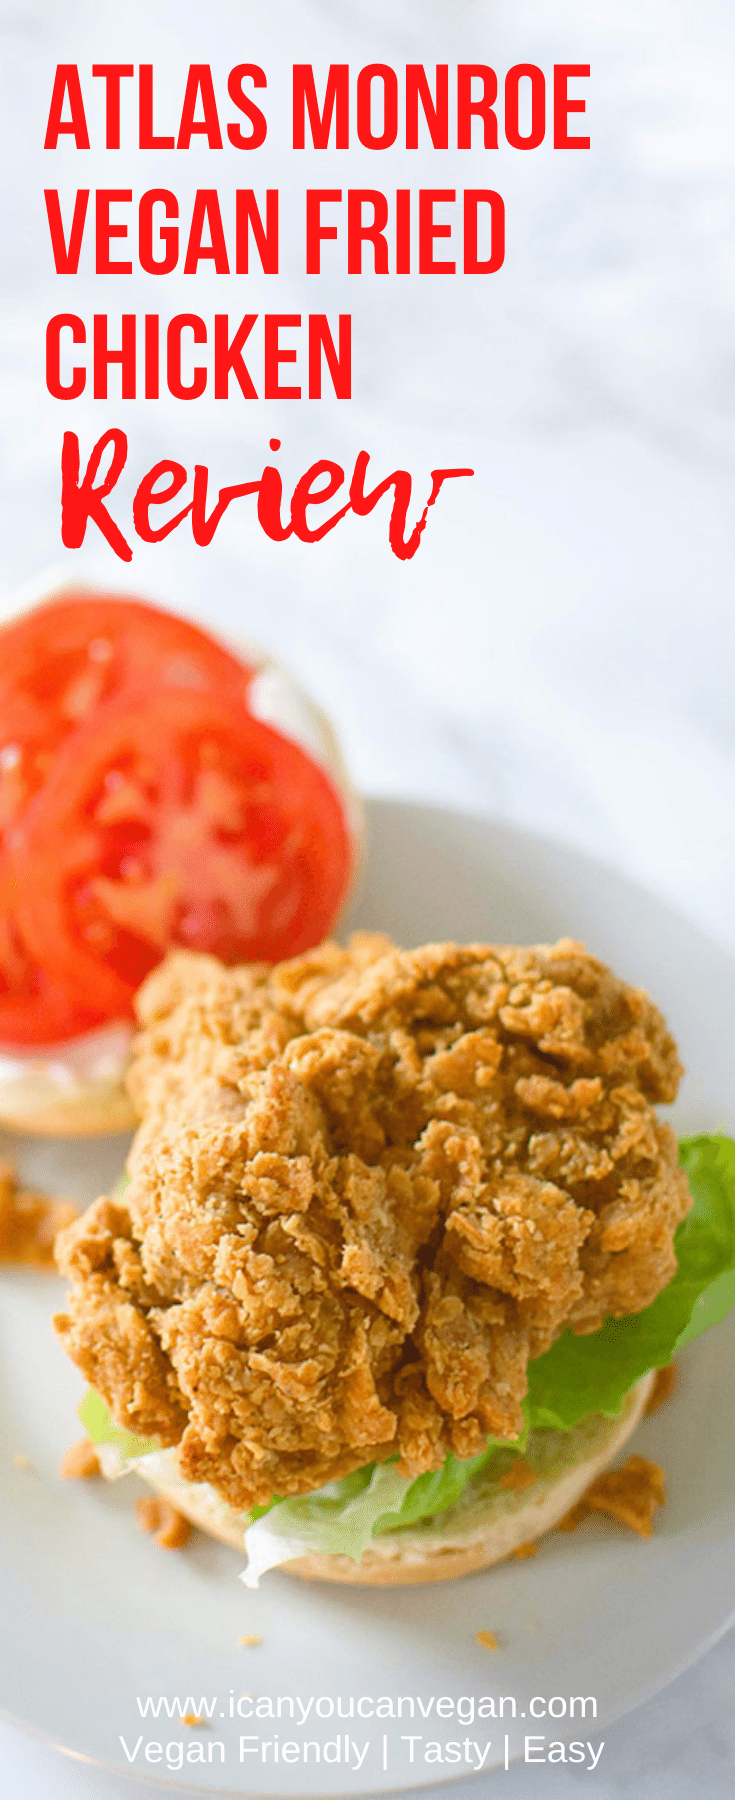 Atlas Monroe Vegan Fried Chicken- Pinterest 